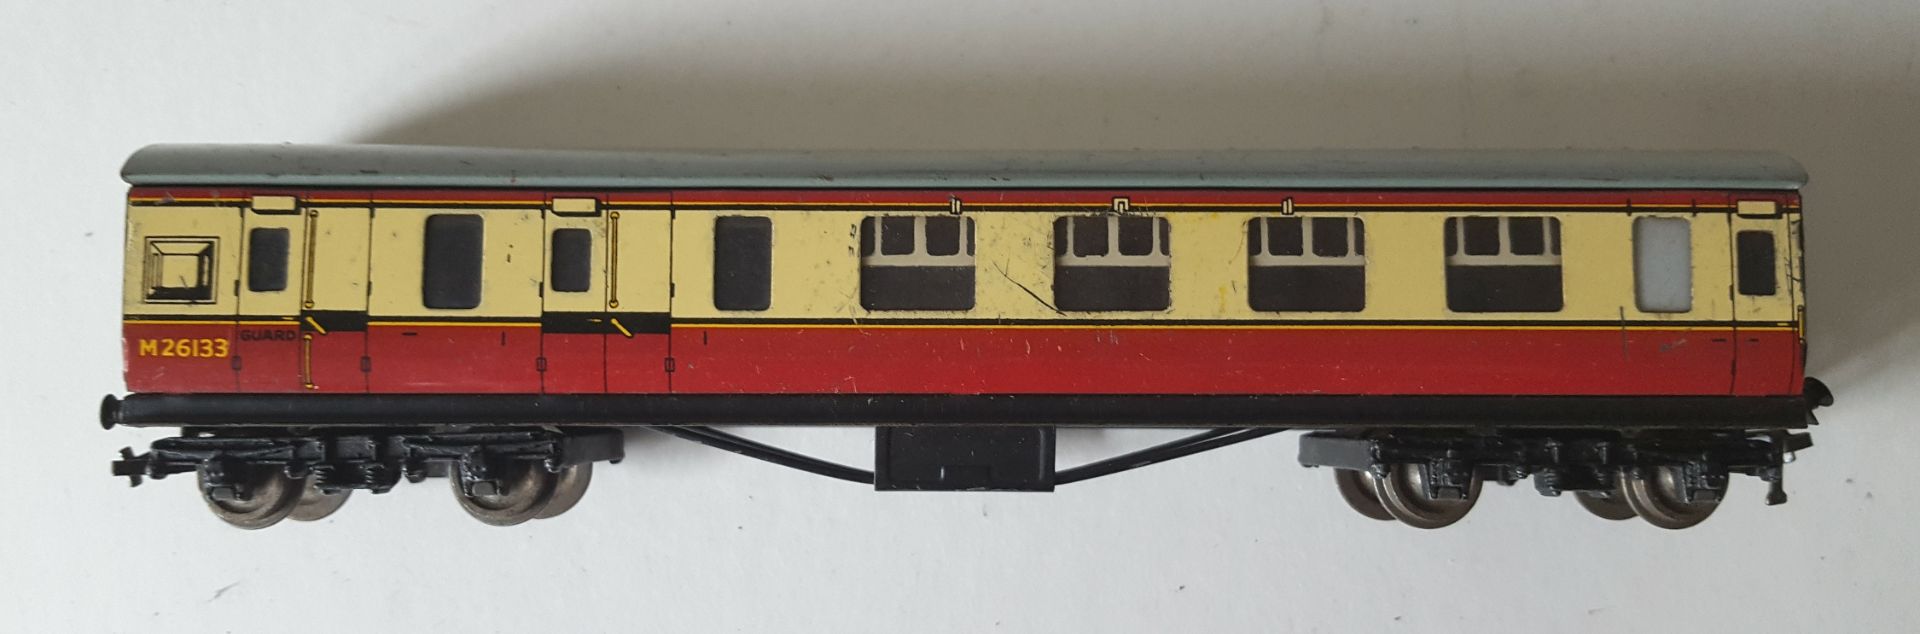 Vintage Retro 2 x Tin Plate Model Train Coaches 00 Gauge Hornby Dublo Meccano - Image 3 of 4